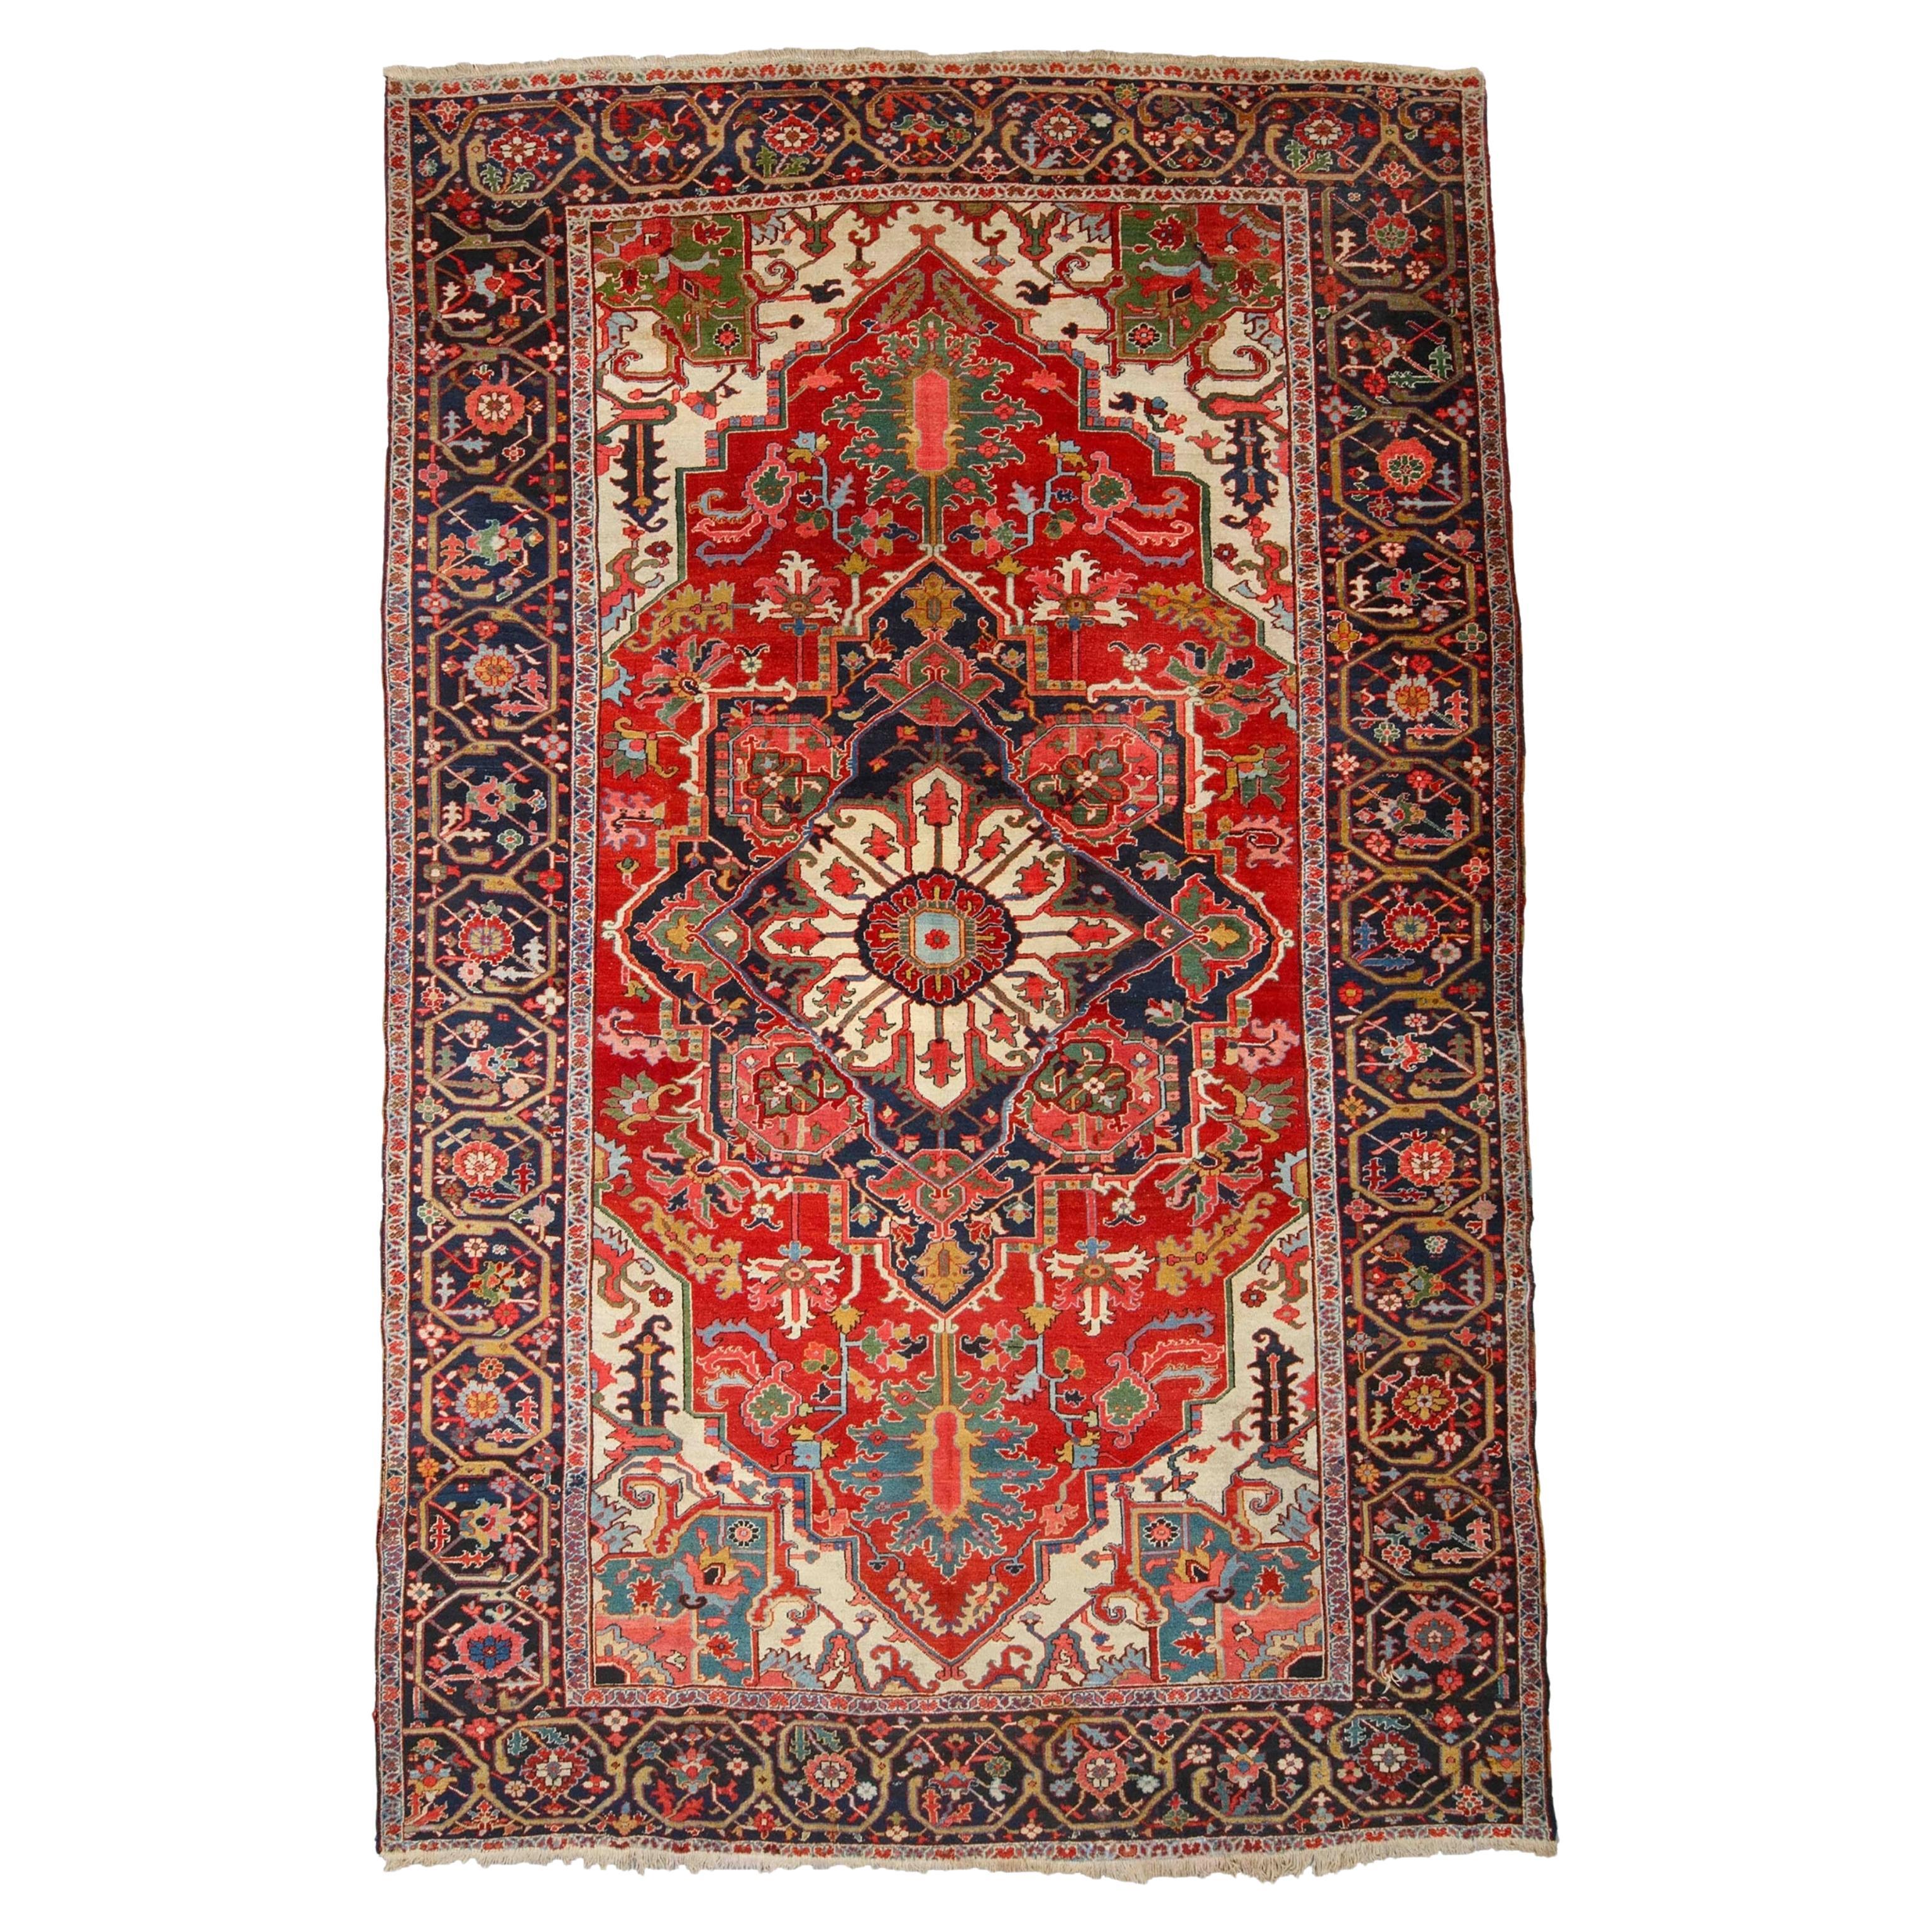 Antique Serapi Carpet - 19th Century Serapi Carpet, Antique Rug